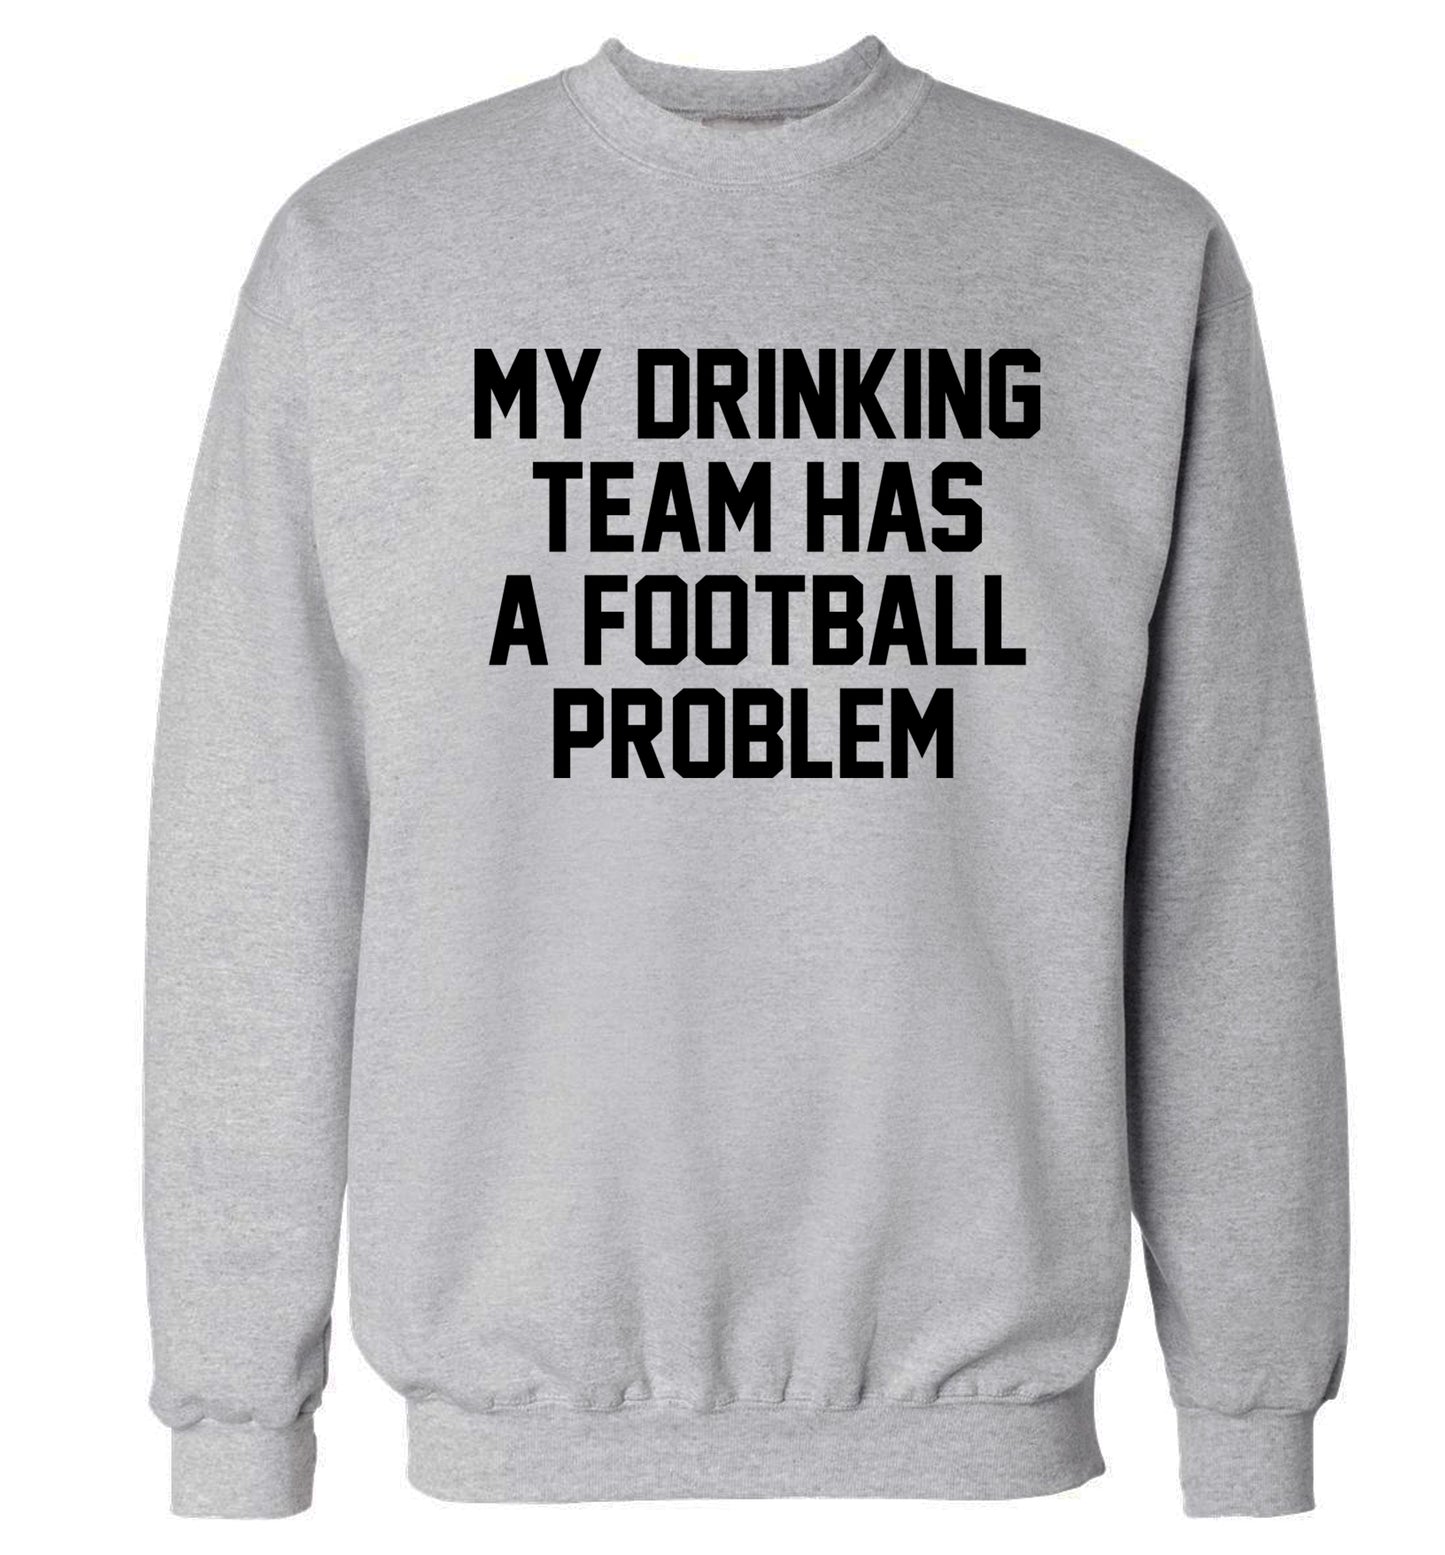 My drinking team has a football problem! Adult's unisexgrey Sweater 2XL